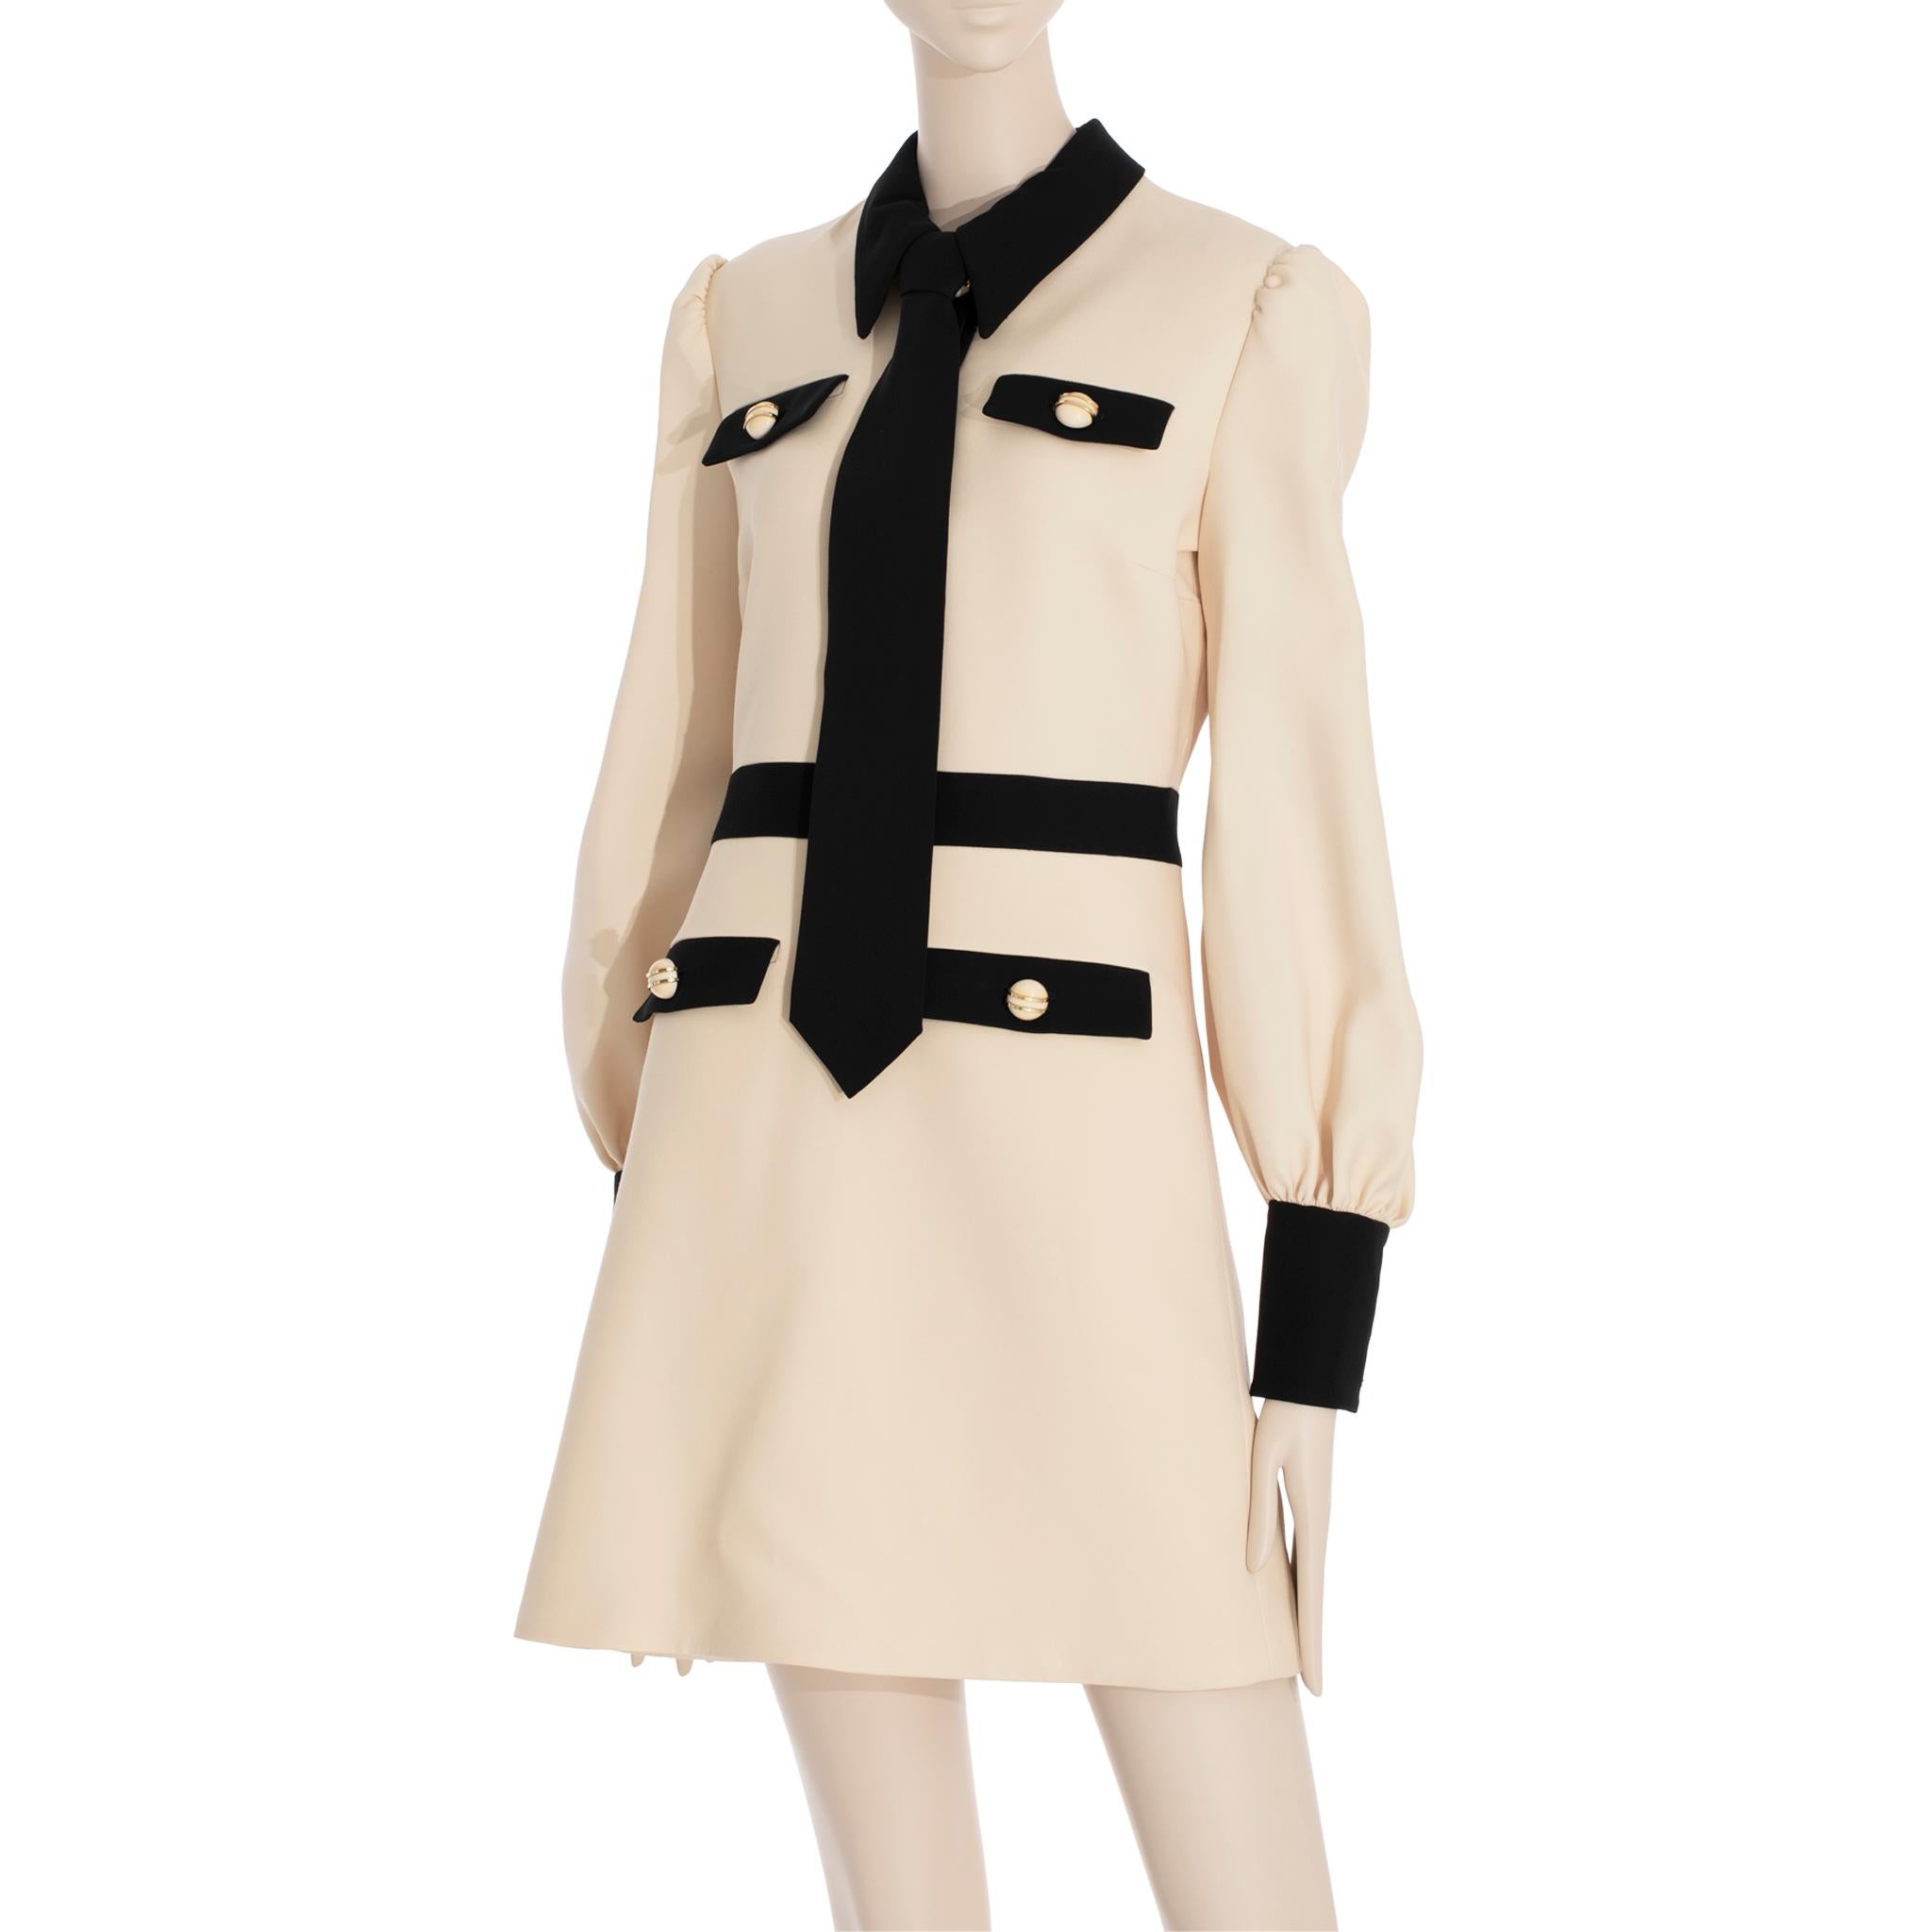 Gucci Long Sleeve Dress With Tie Ivory & Black Wool & Silk 40 IT 5